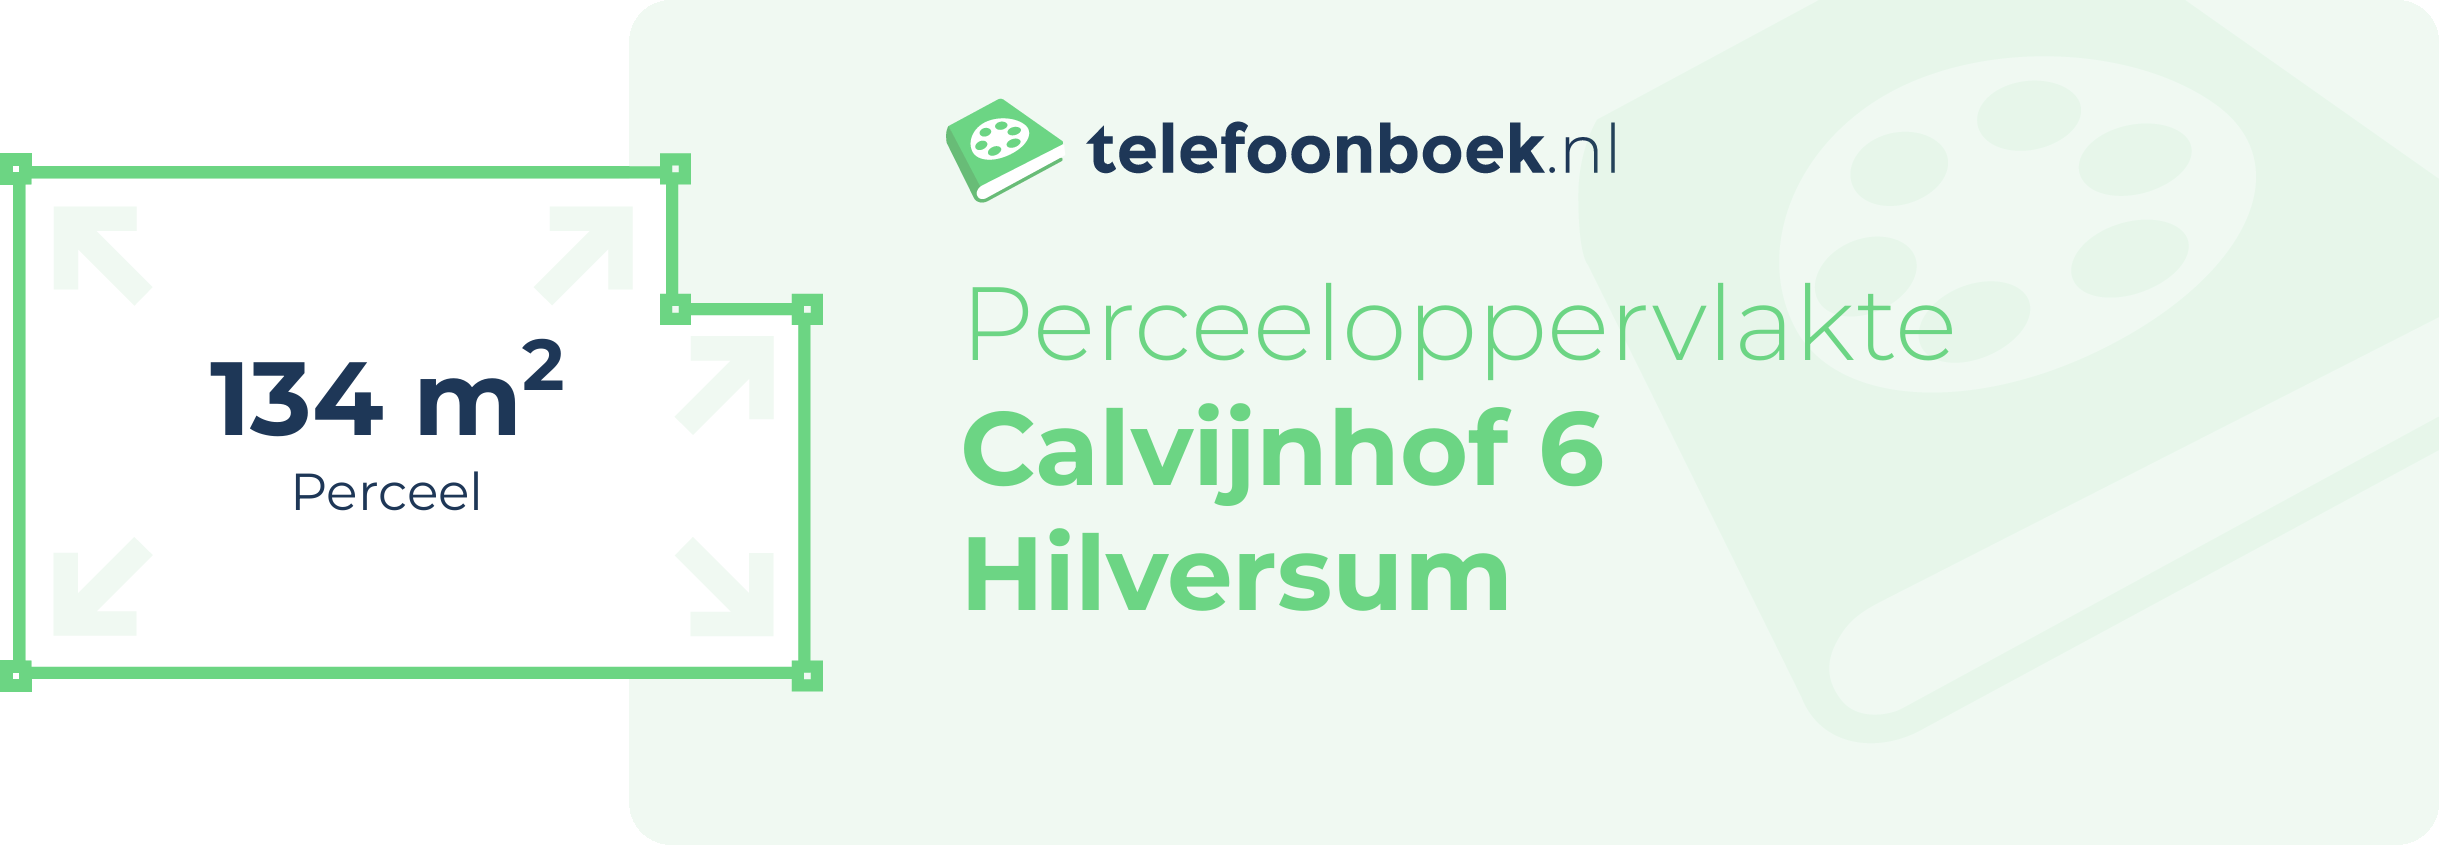 Perceeloppervlakte Calvijnhof 6 Hilversum